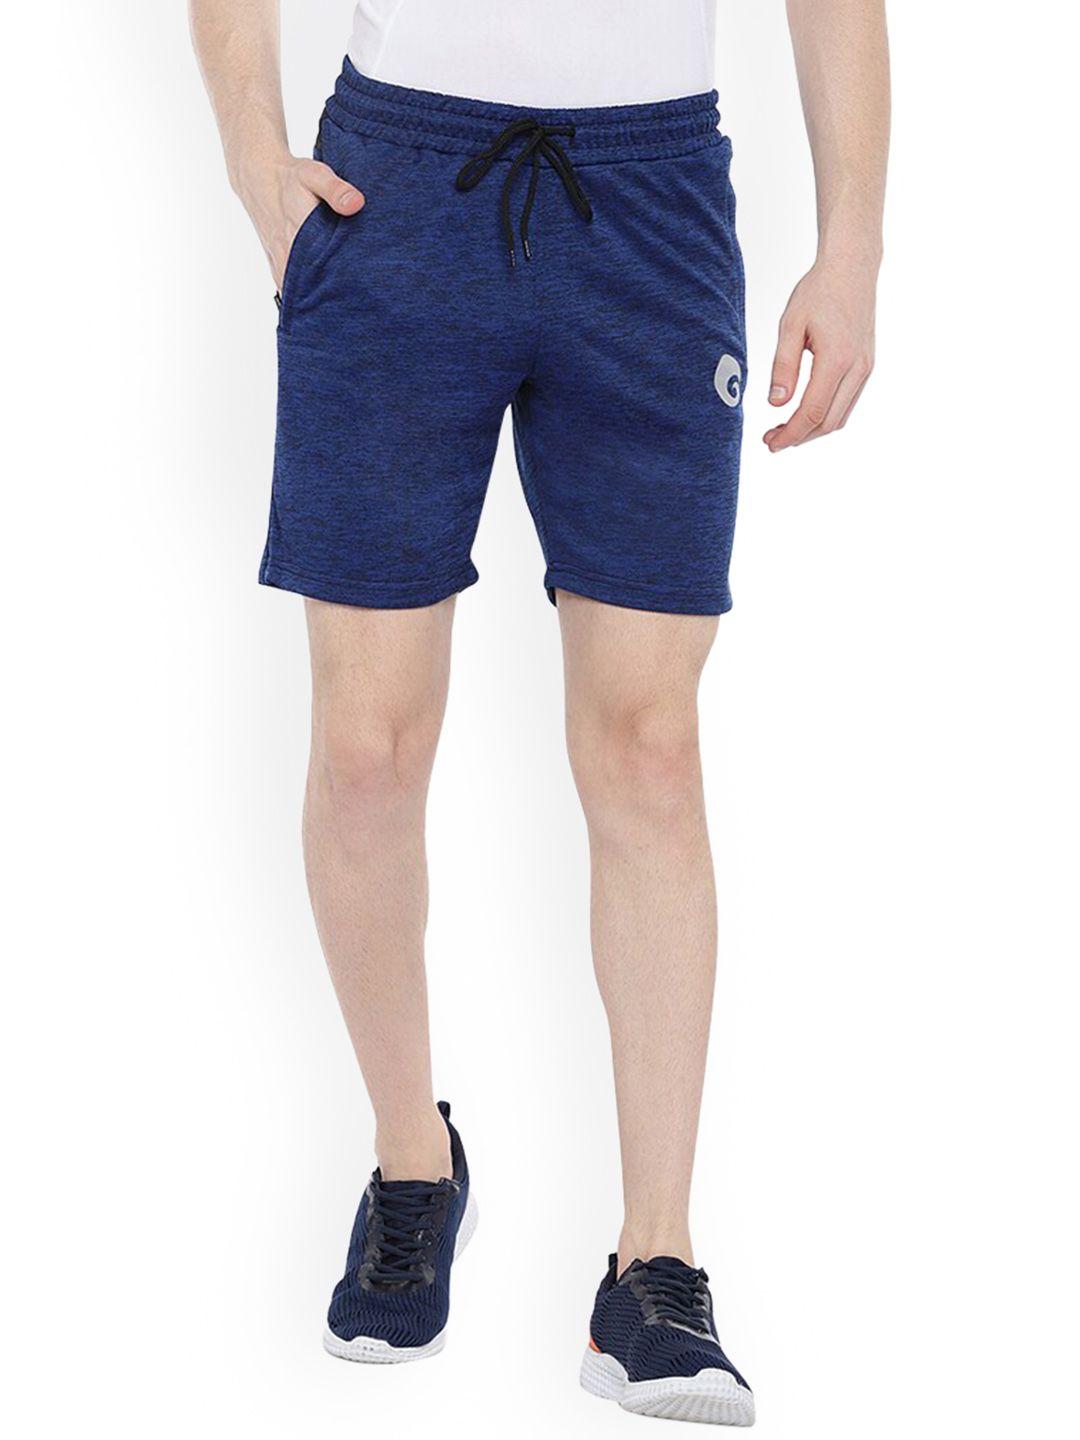 omtex-men-blue-printed-training-or-gym-shorts